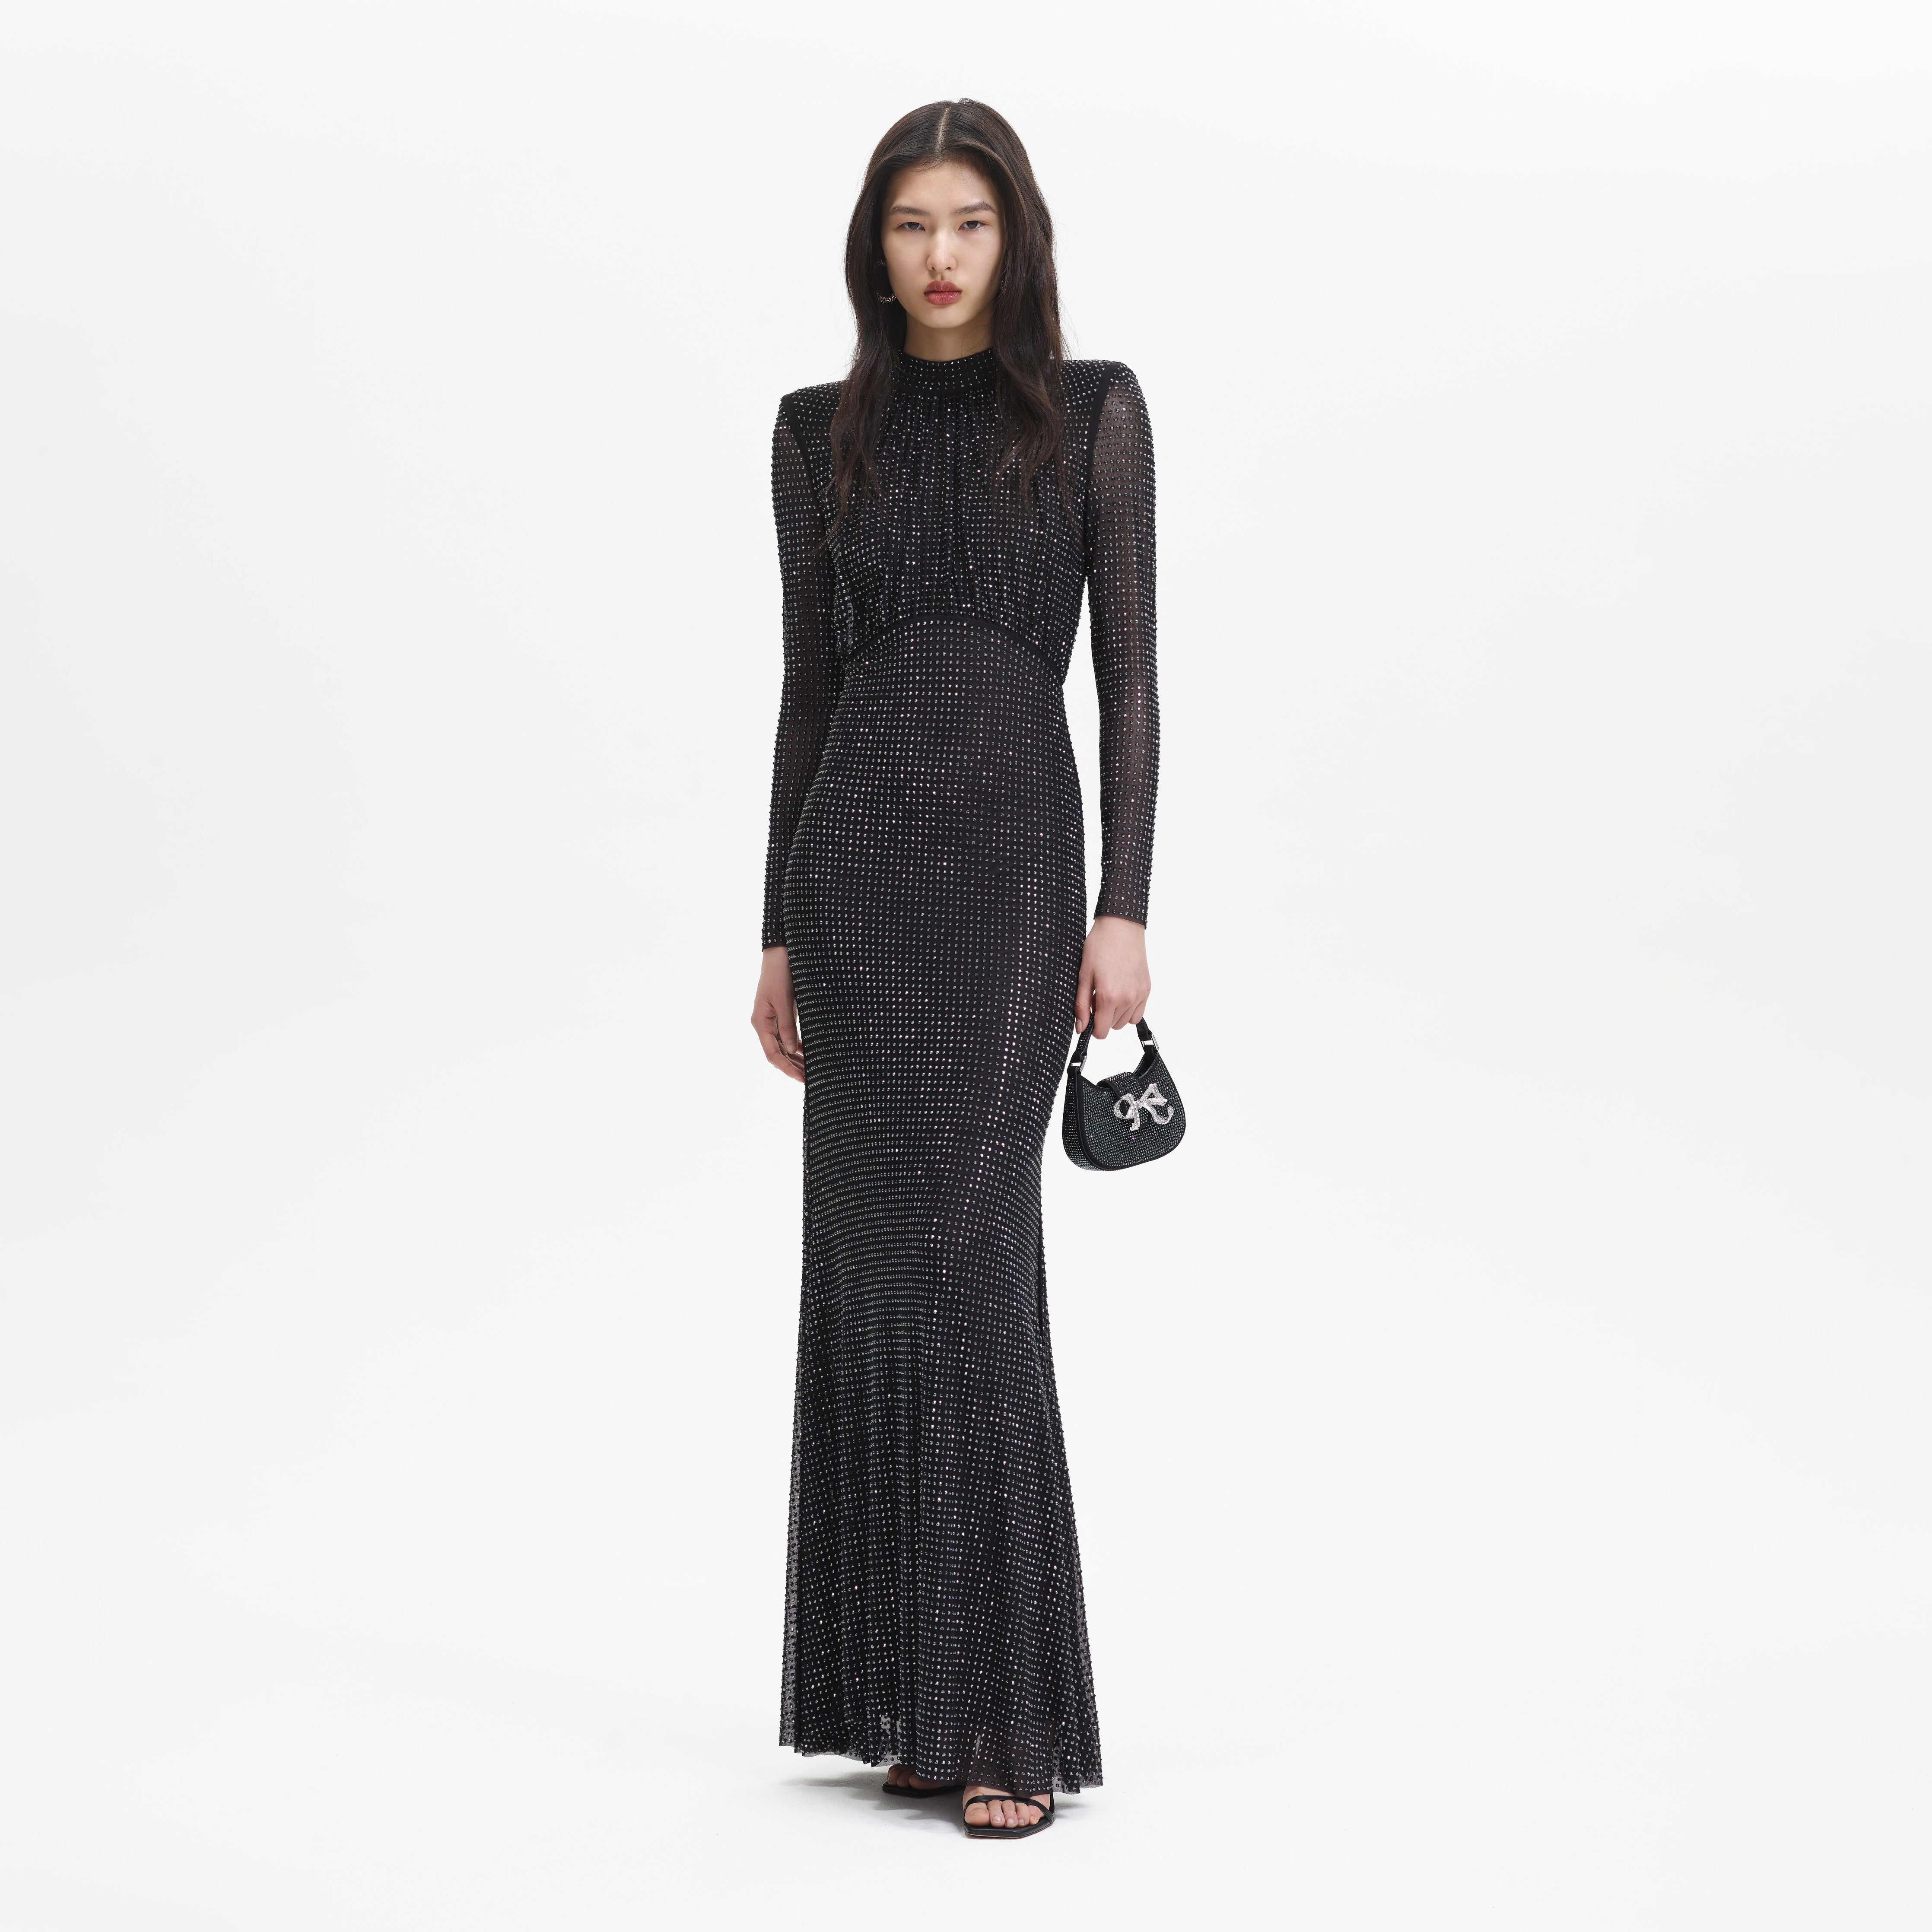 All Night Long Black Sequins Gown, सेक्विन पोशाक - Sew Bery, Mumbai | ID:  25964786033